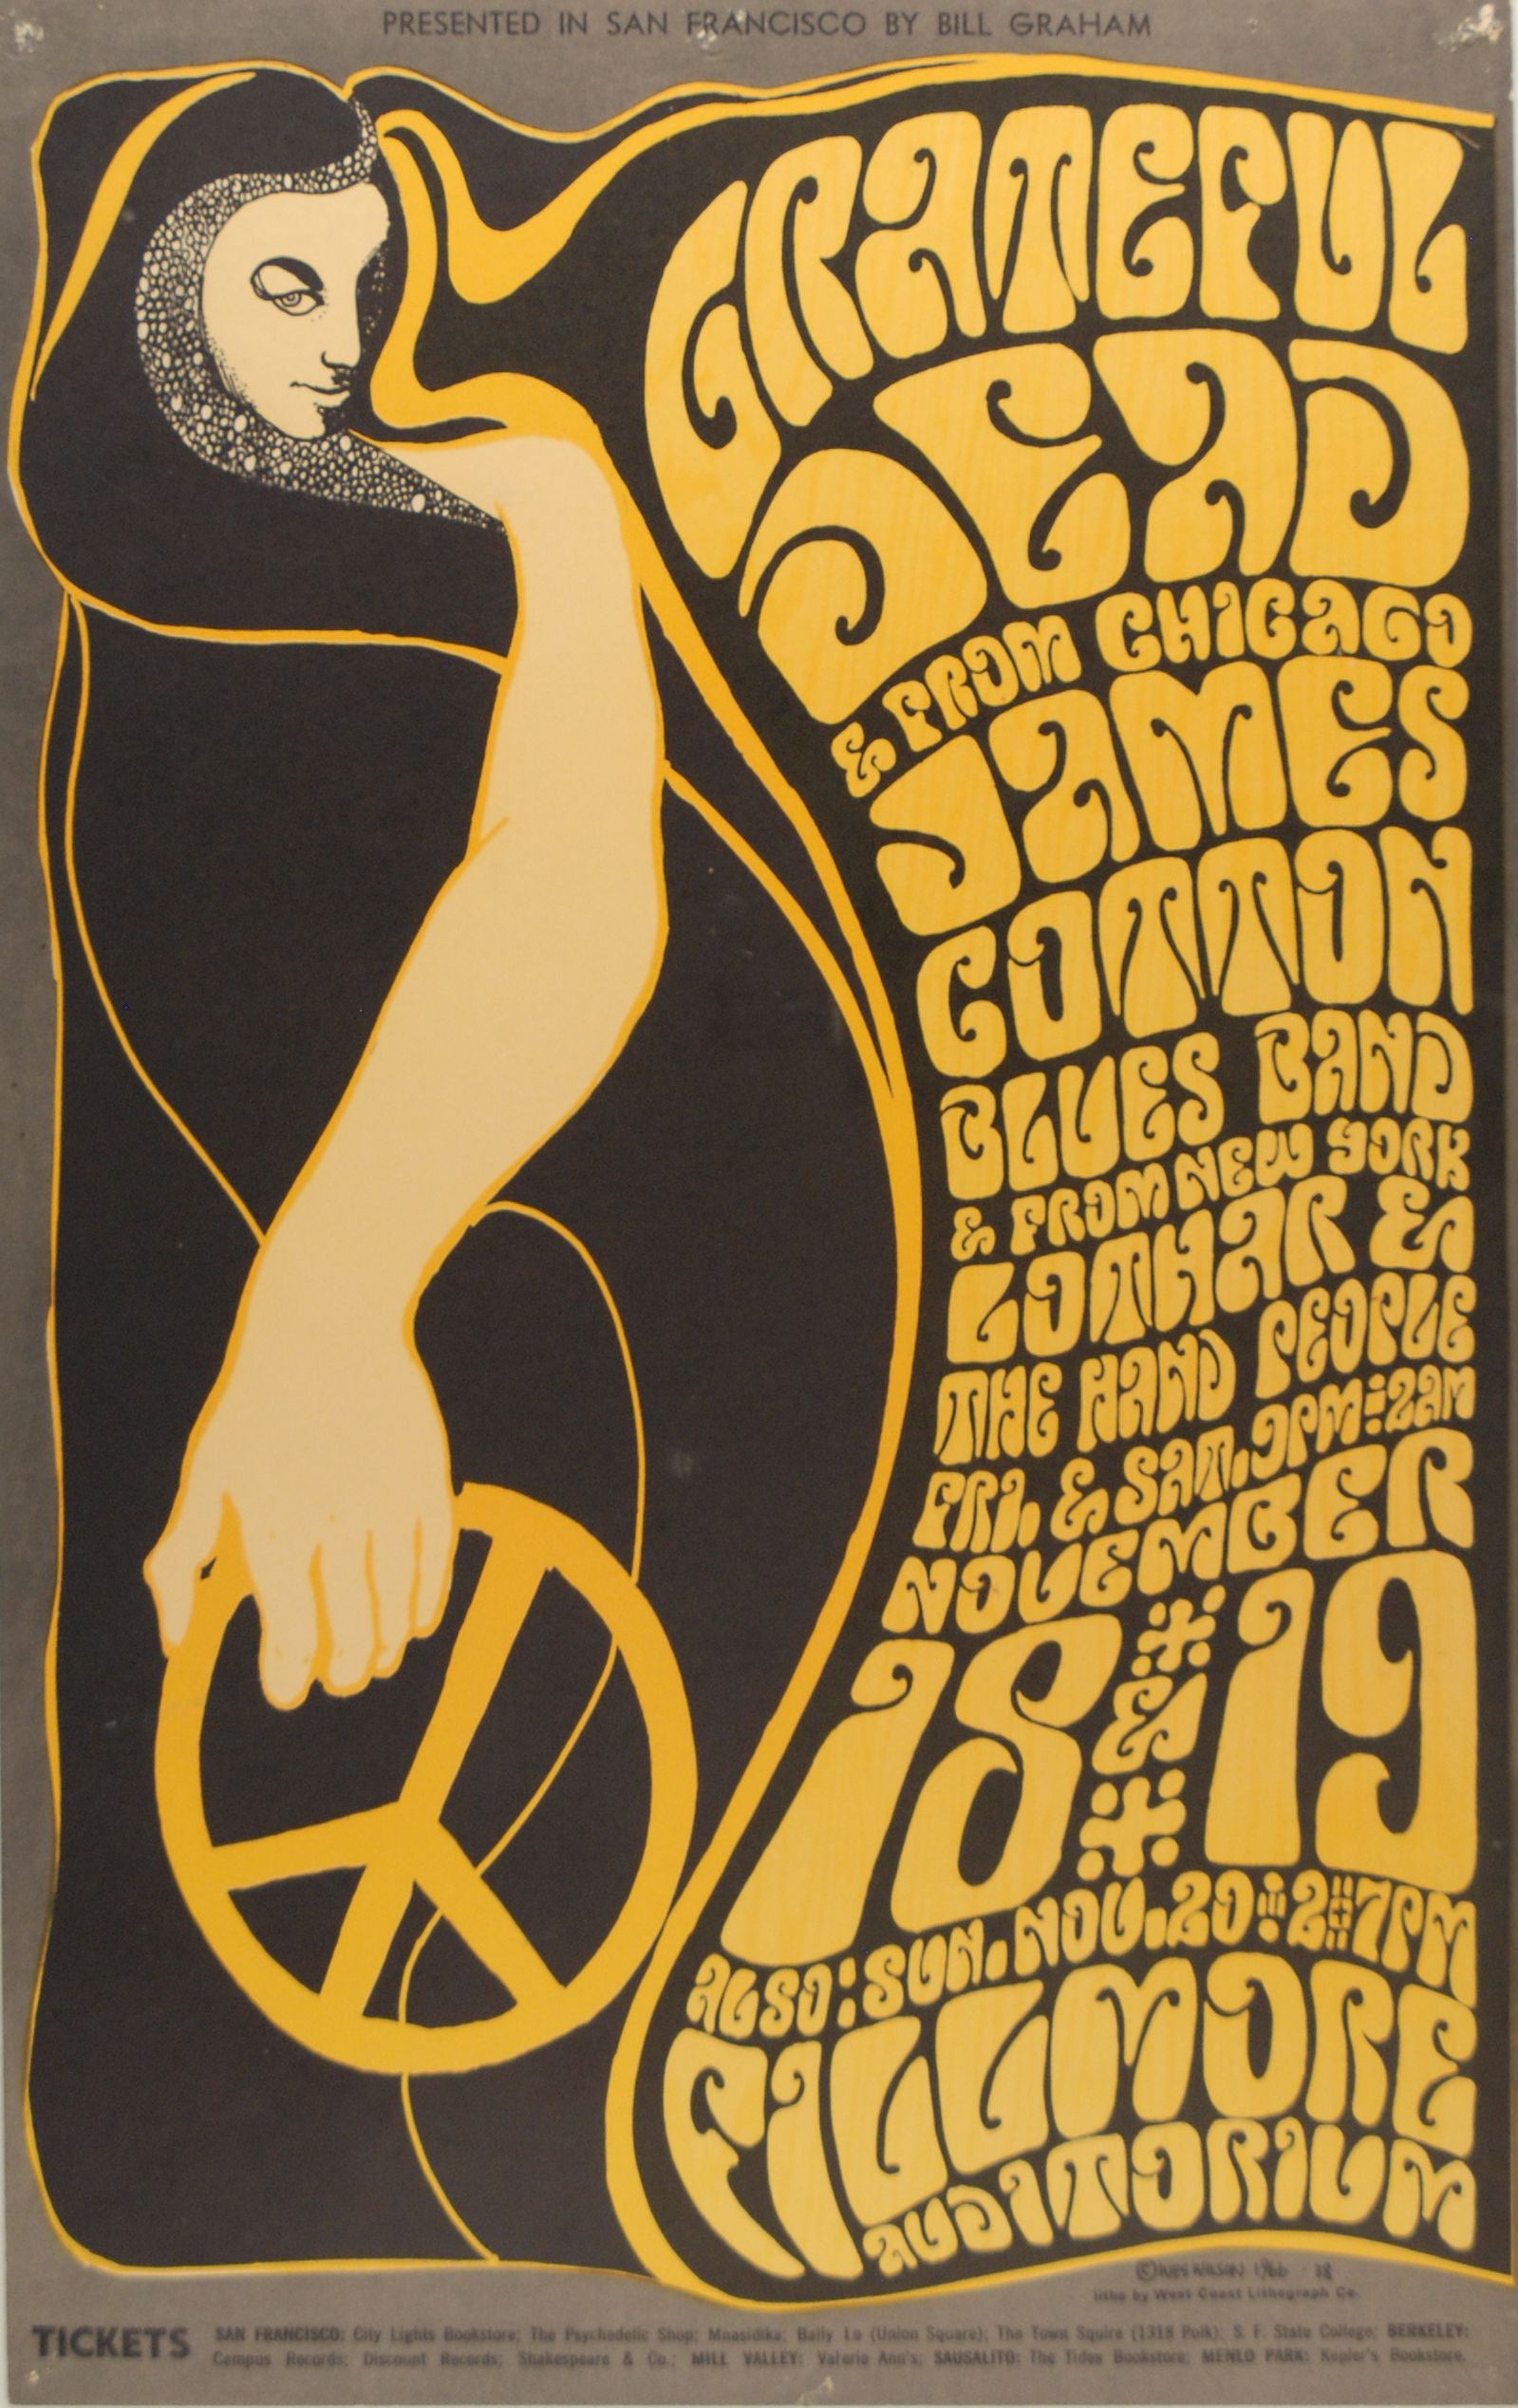 BG-38-OP-1 Grateful Dead The Fillmore 1966 Concert Poster